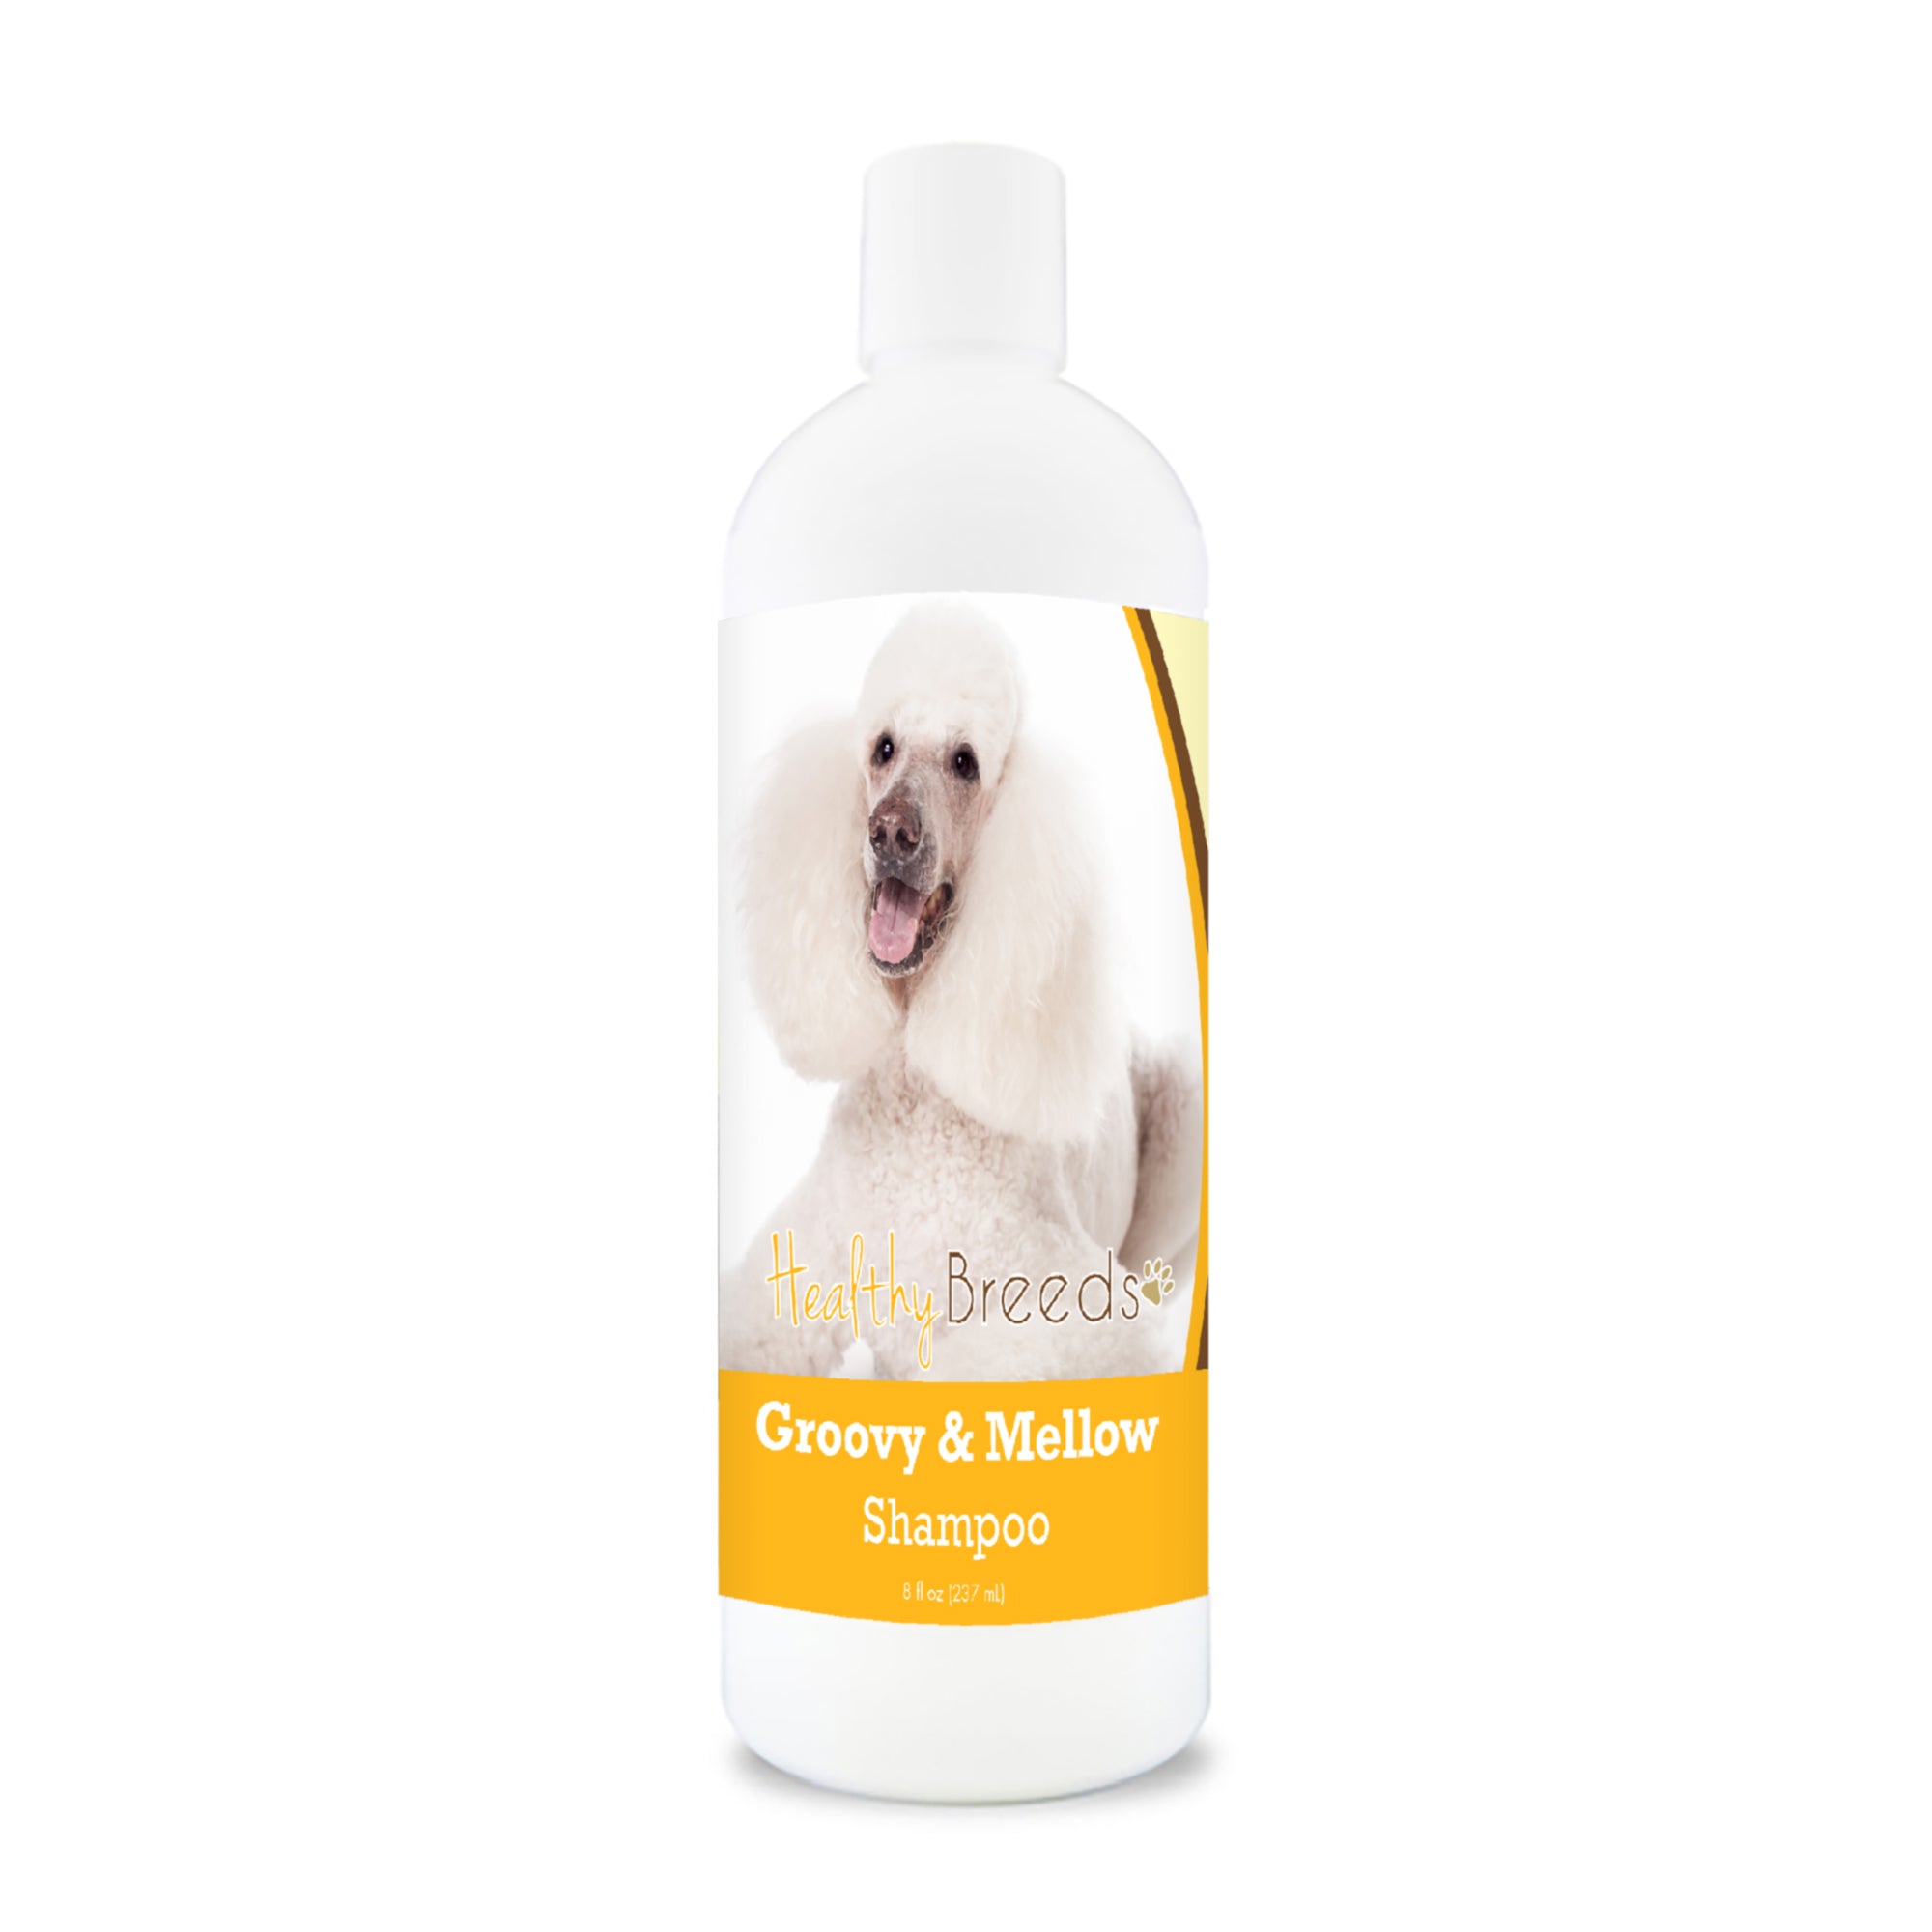 Poodle Groovy & Mellow Shampoo 8 oz